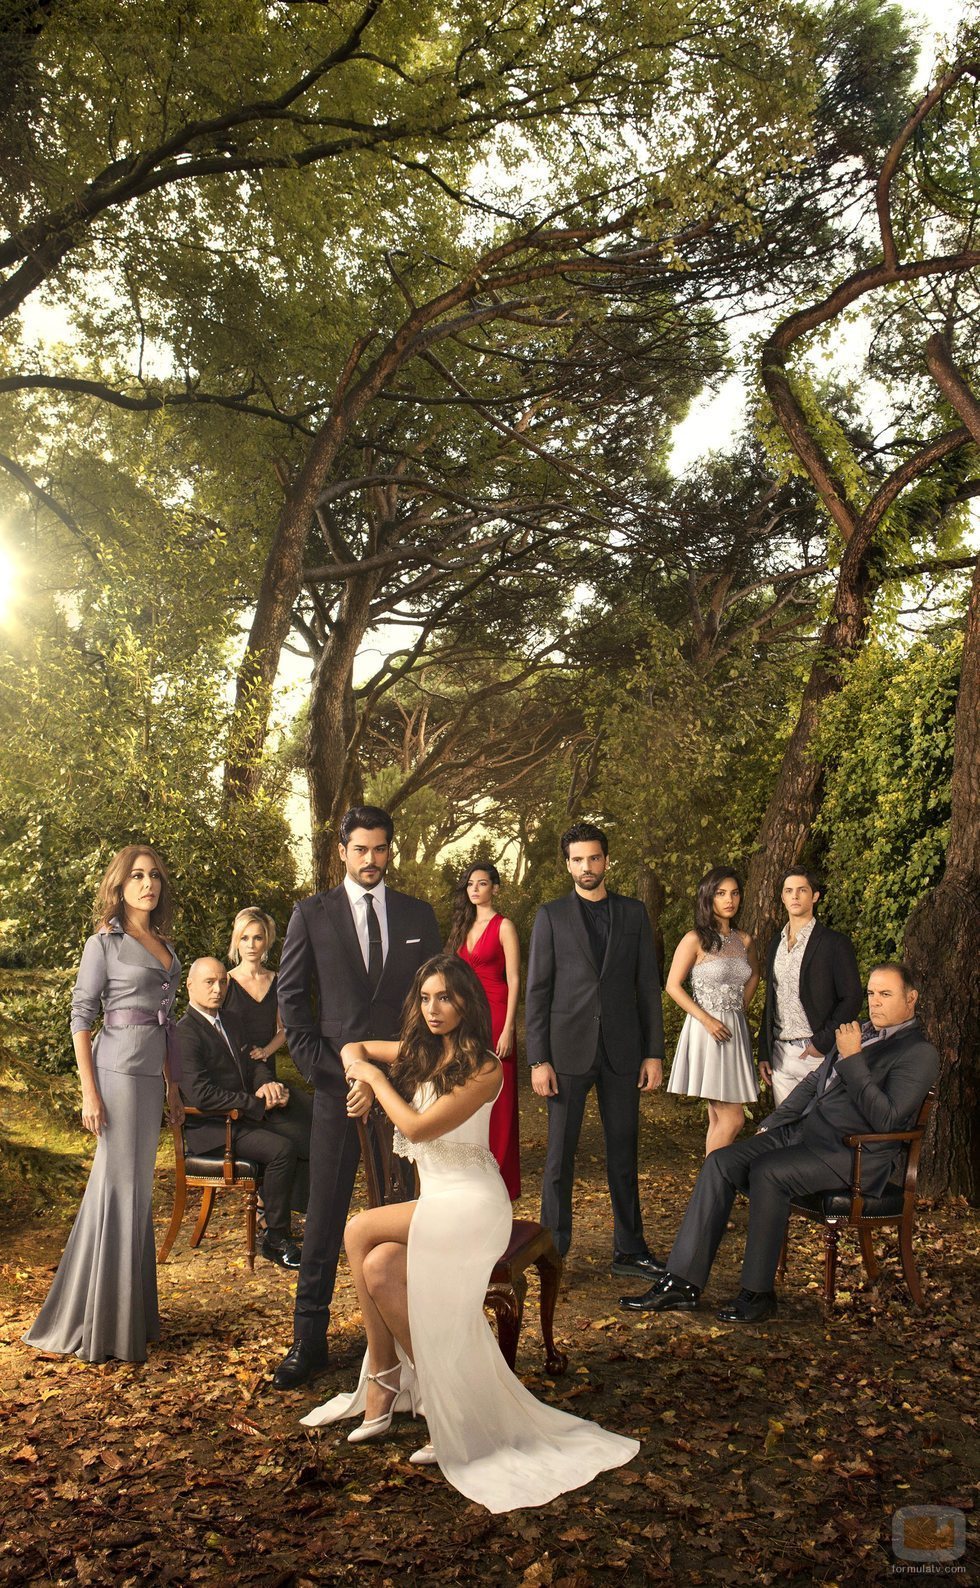 Cartel oficial de 'Amor eterno' la telenovela turca de gran éxito que emitirá Divinity